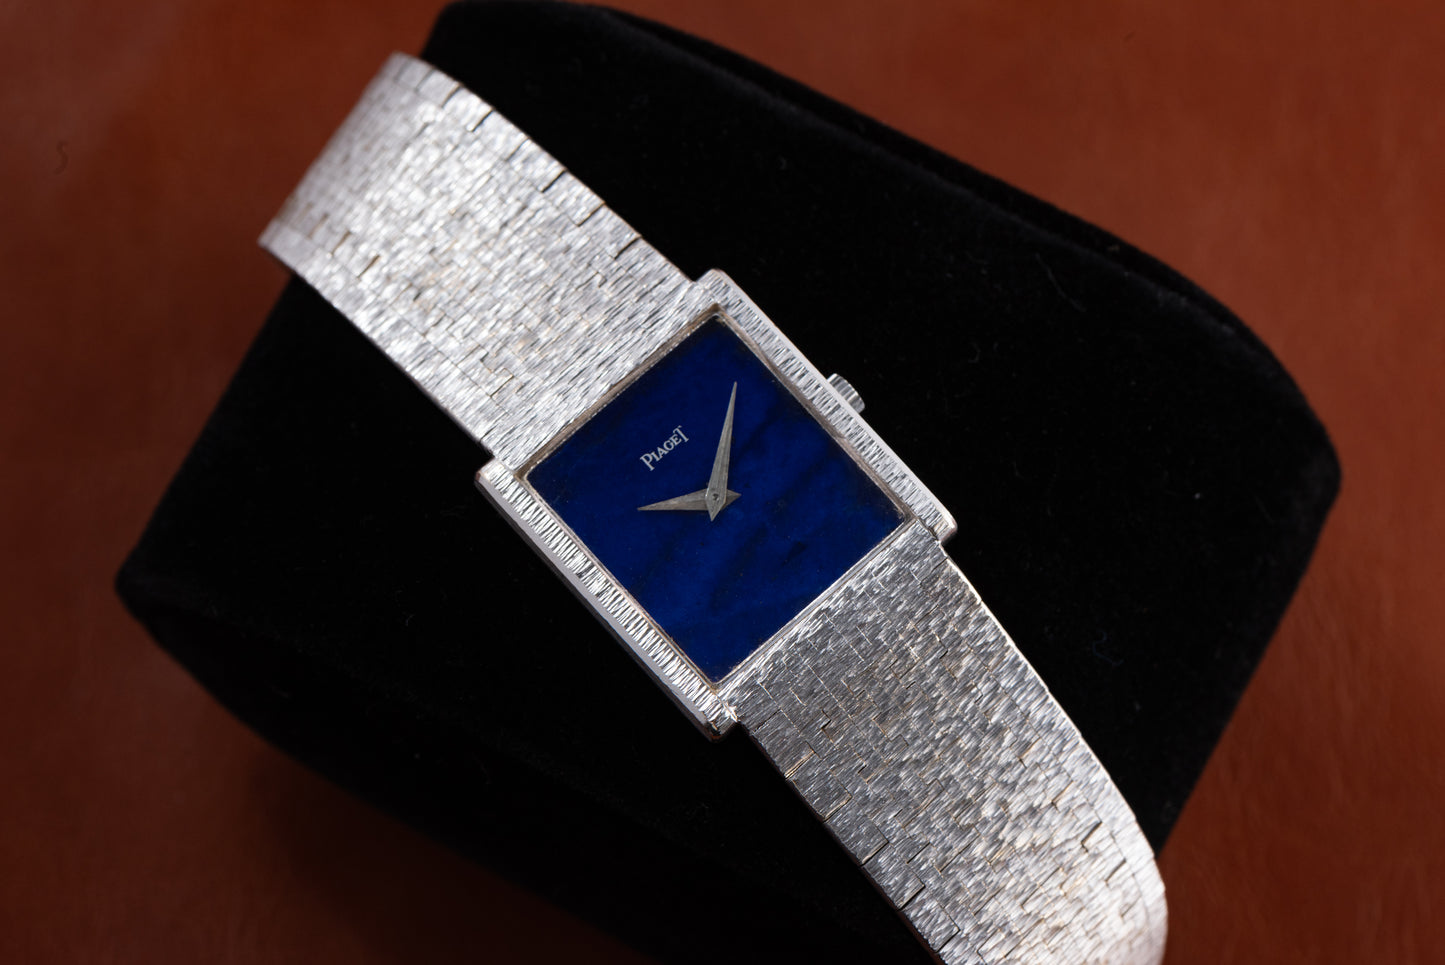 Piaget White Gold 'Lapis Lazuli' Dress Watch